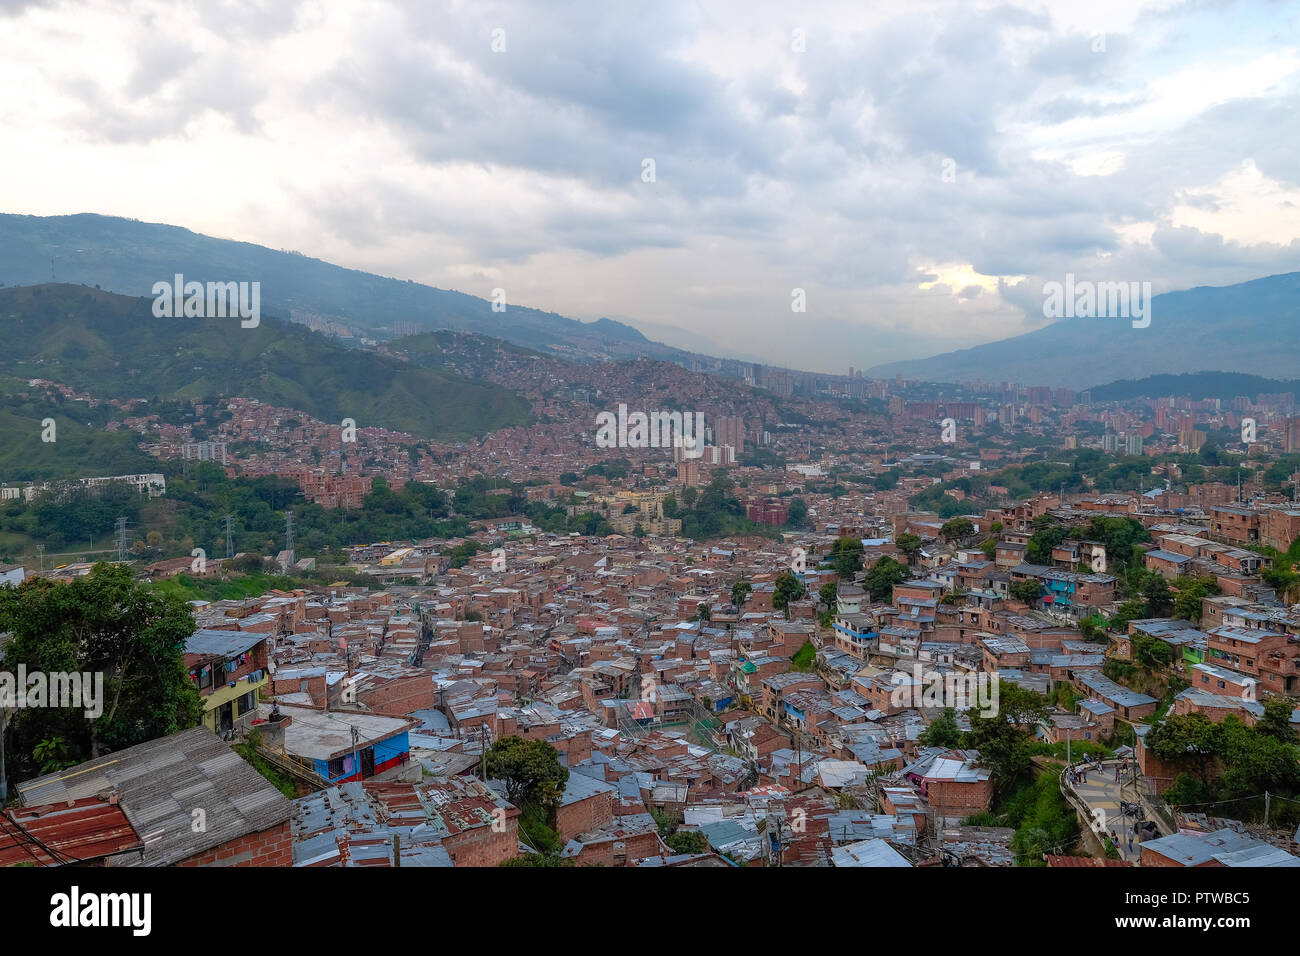 Vue panoramique Comuna 13 - Bogota - Colombie Banque D'Images